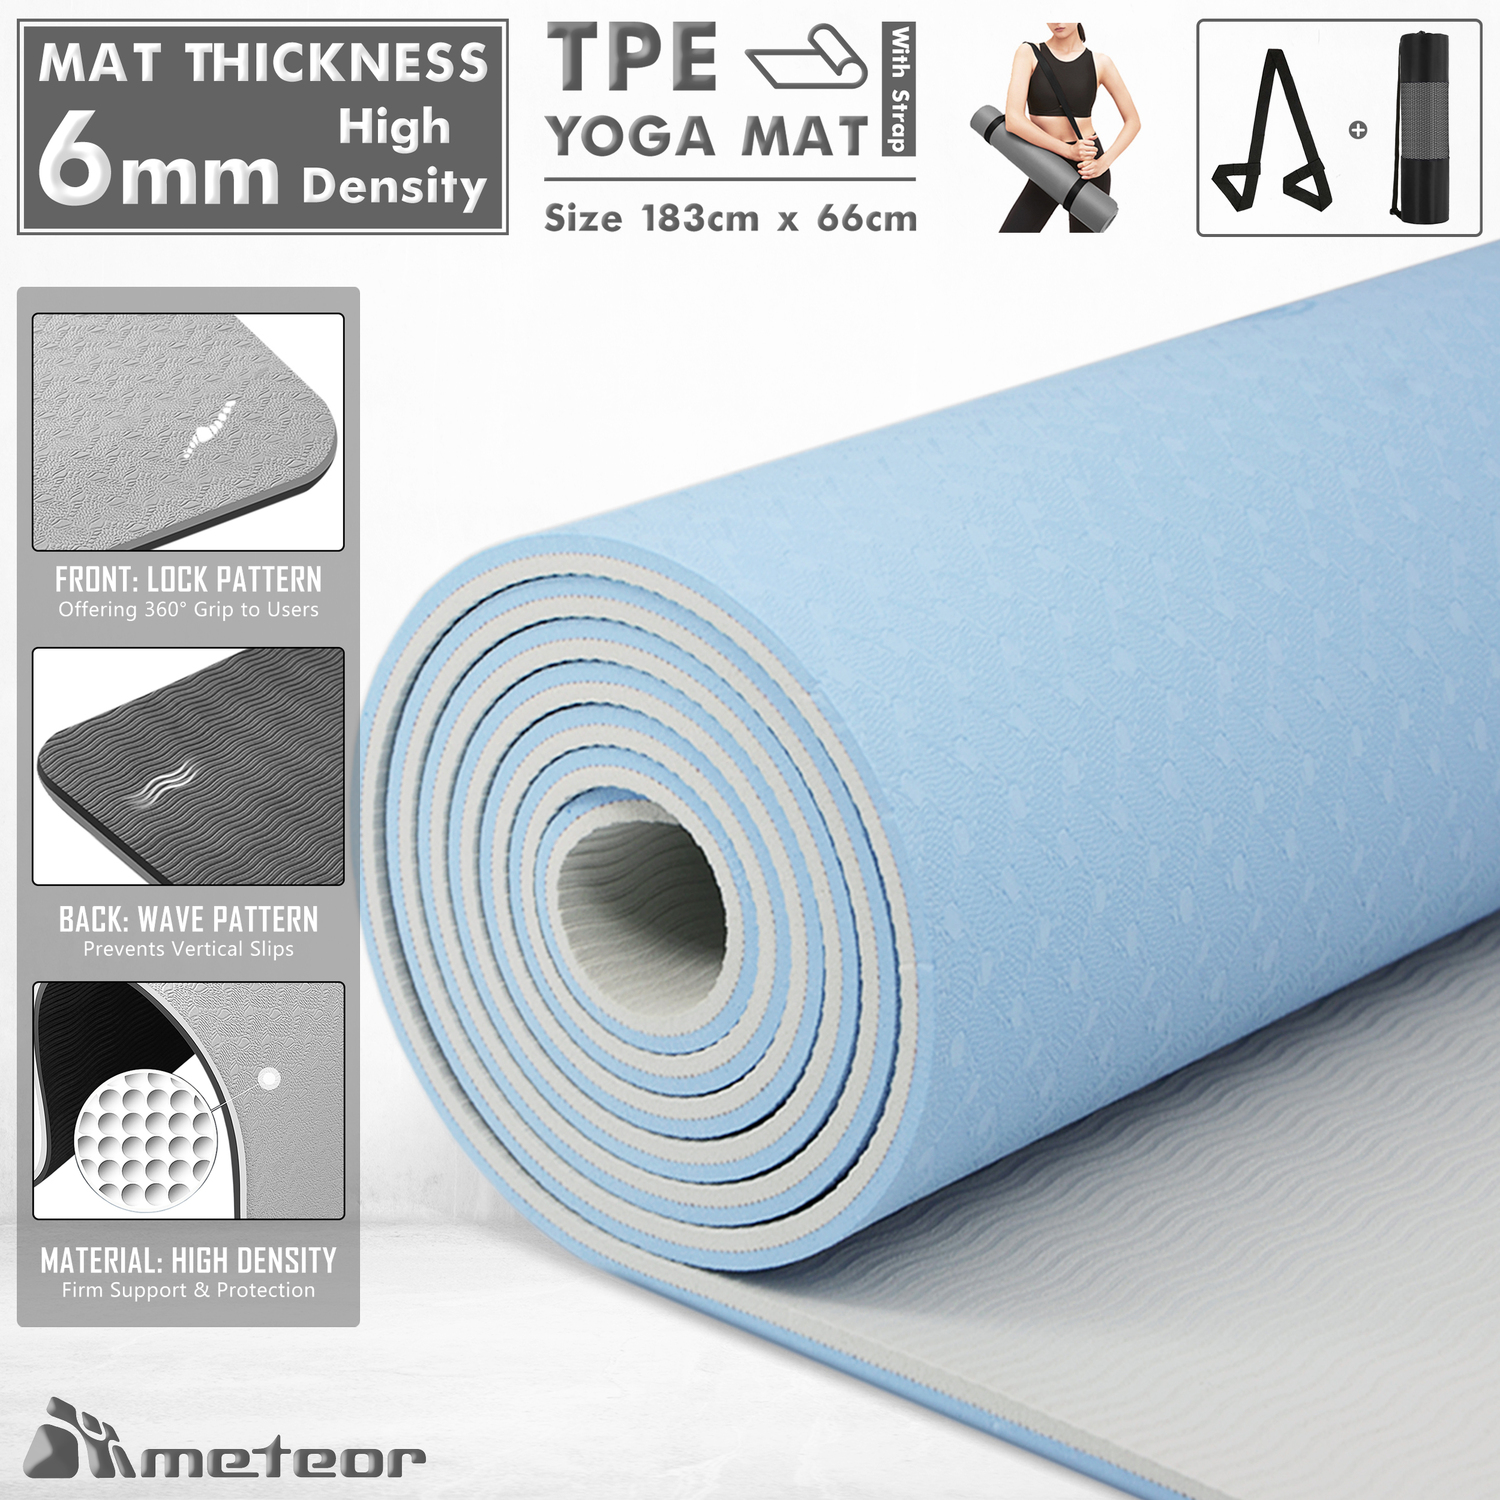 METEOR Non-slip Yoga Mat,Thick Yoga Mat,TPE Yoga Mat,6mm Yoga Mat